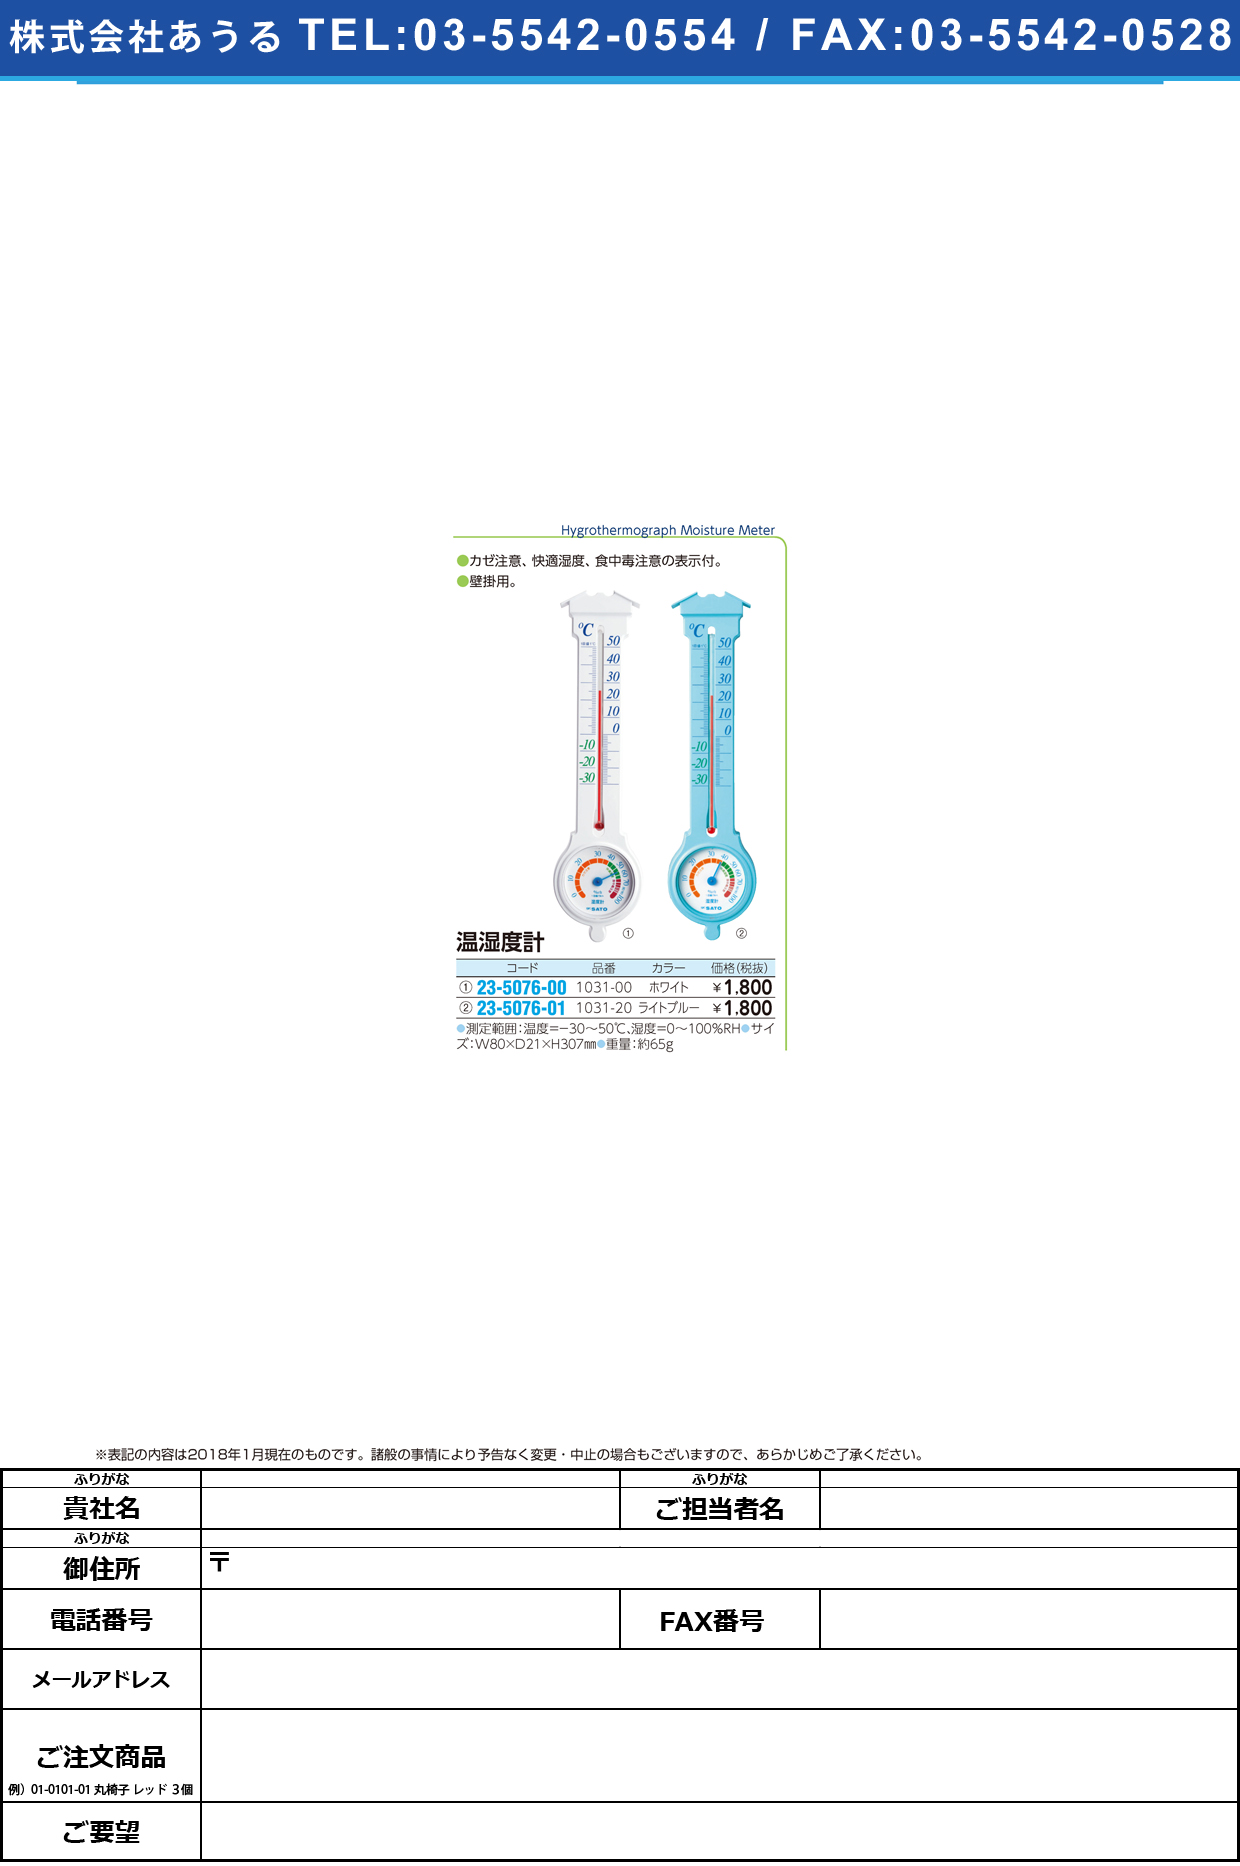 (23-5076-01)温湿度計ミルノＥＸ 1031-20(ﾗｲﾄﾌﾞﾙｰ) ｵﾝｼﾂﾄﾞｹｲﾐﾙﾉEX【1個単位】【2018年カタログ商品】